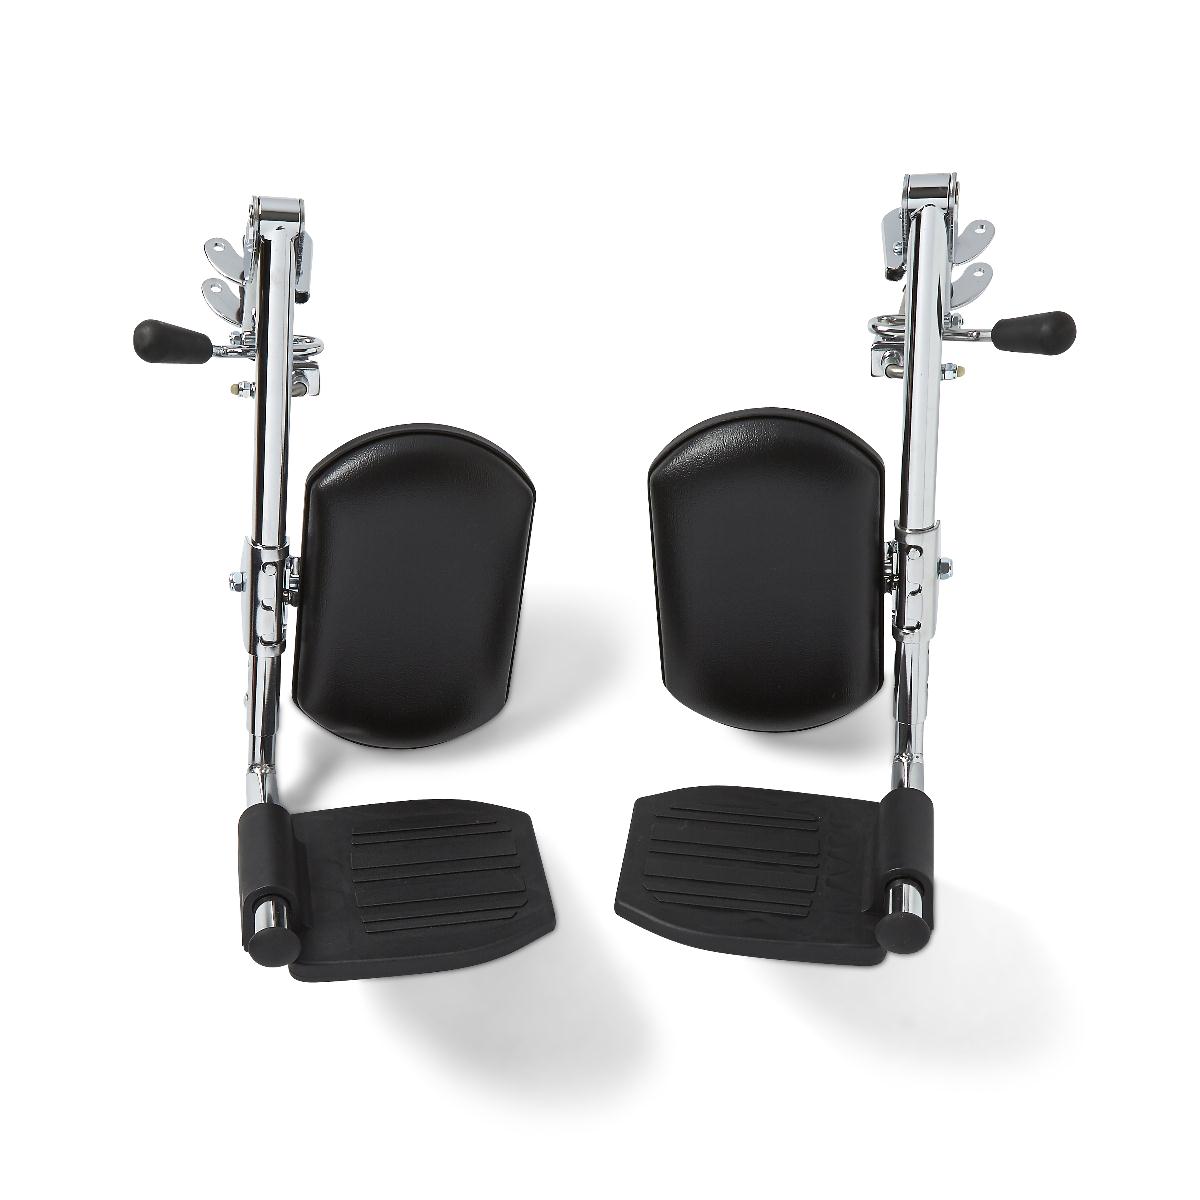 2 Each-Pair / Steel / Wheelchair Legrests Patient Safety & Mobility - MEDLINE - Wasatch Medical Supply